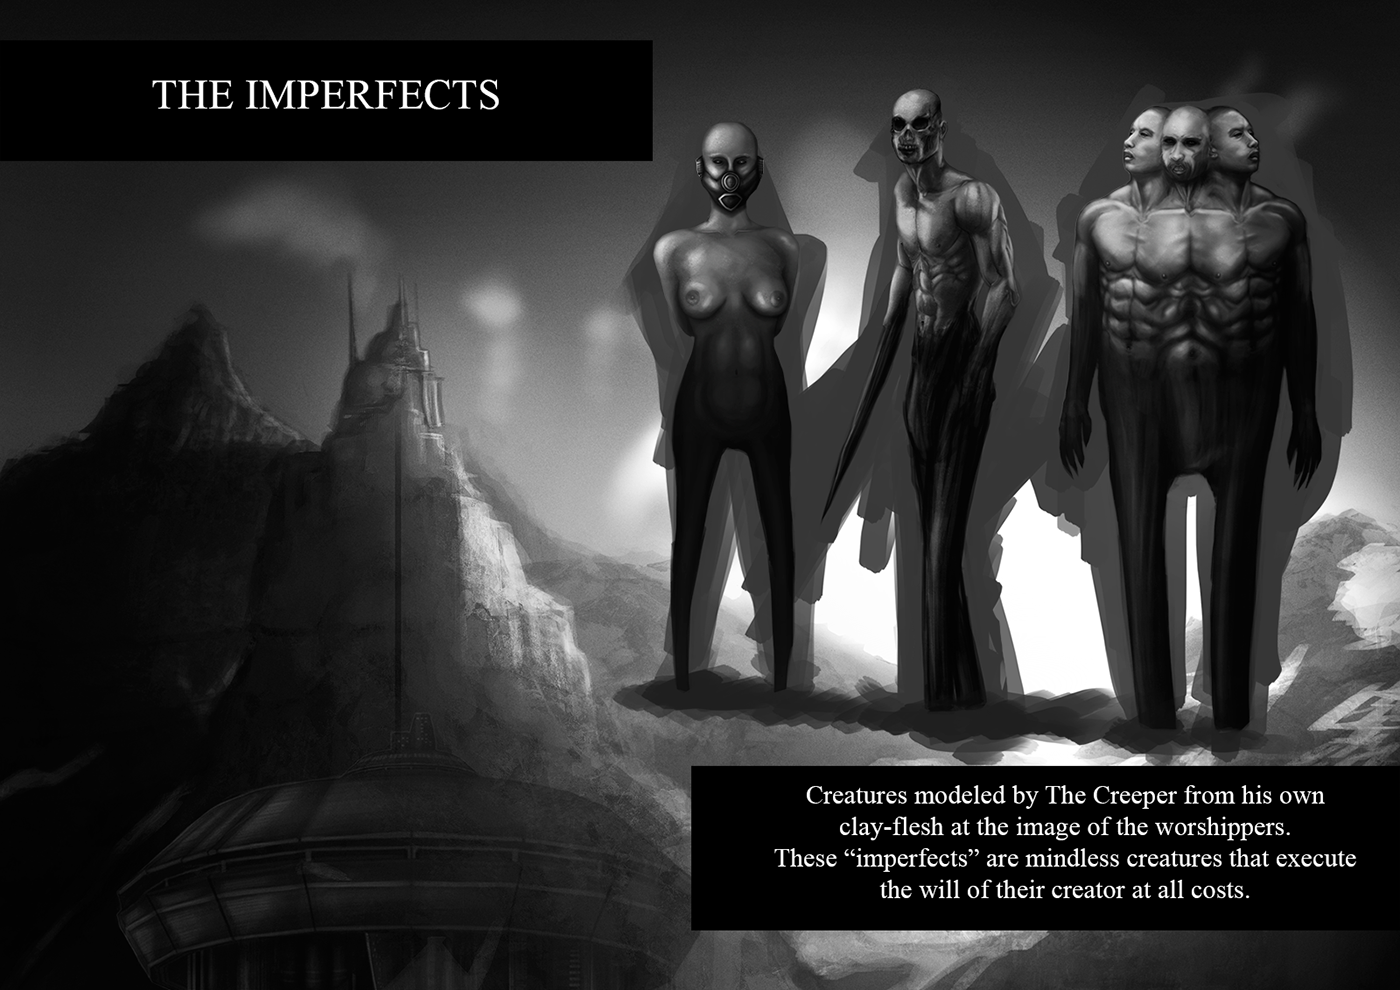 creeper alien God spaceship myth legend concept imperfect grotesque dark